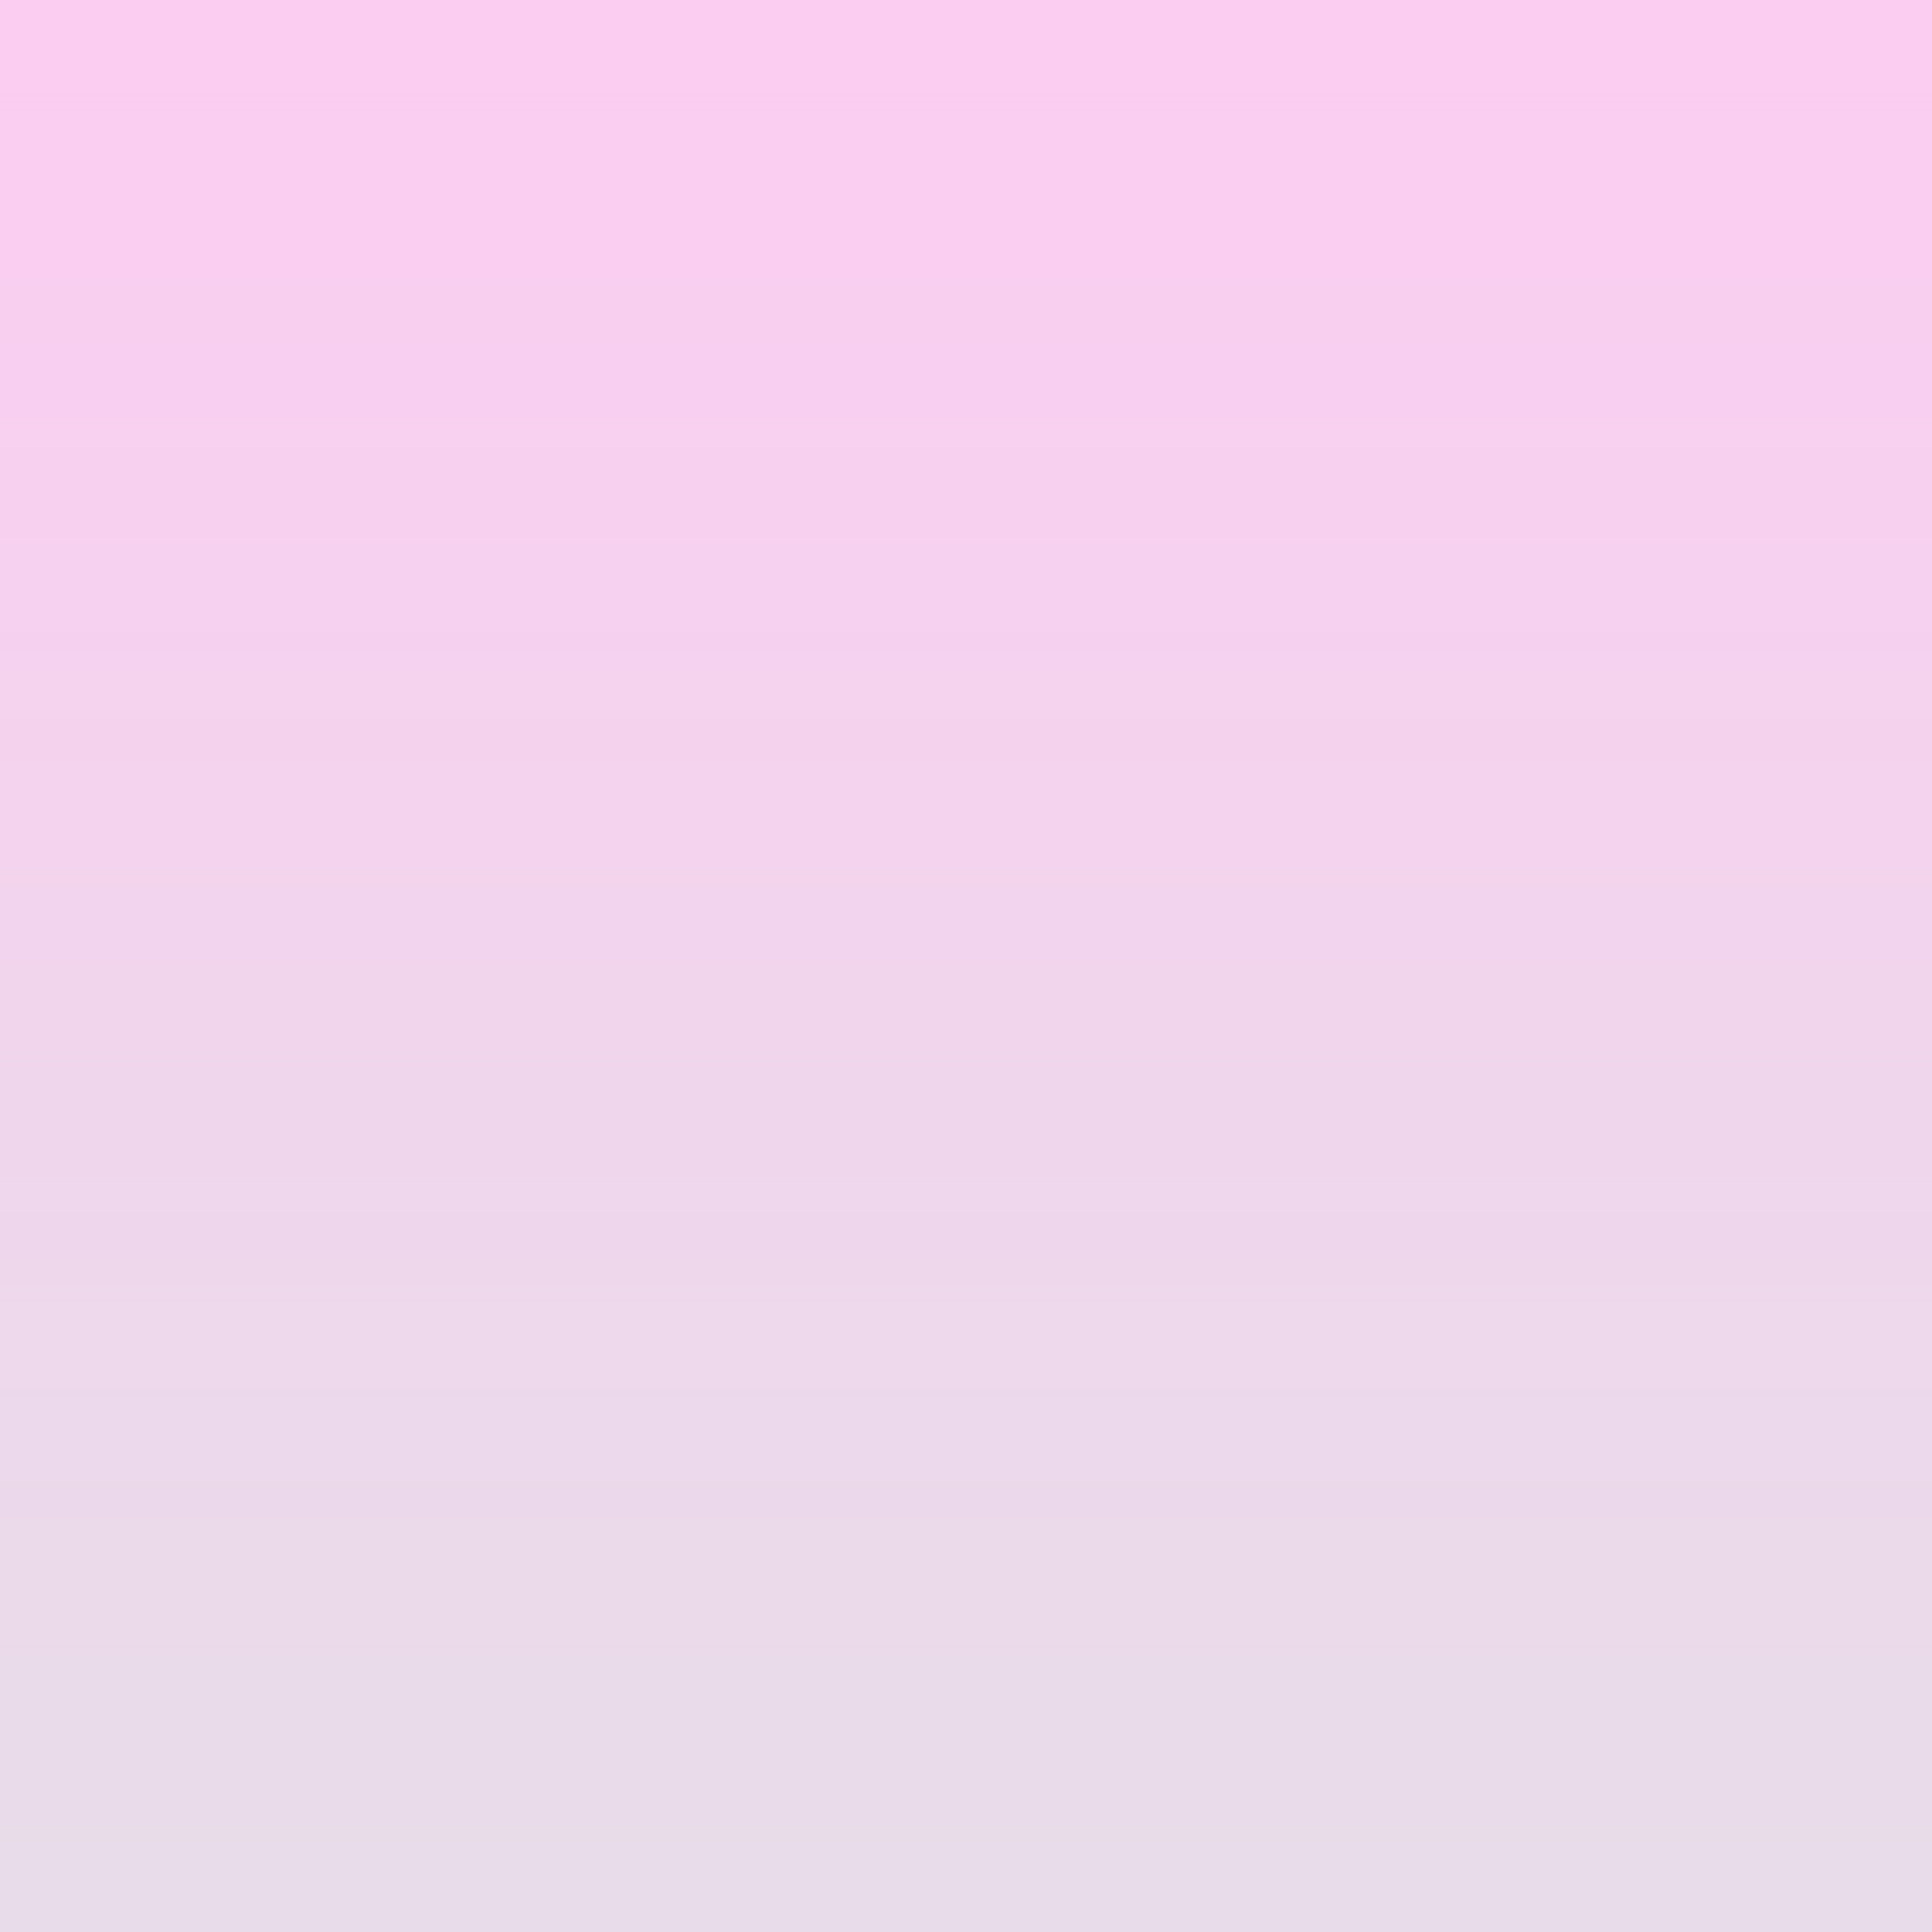  Farbverlauf Hintergrundbild 7560x7560. Light Pink / Purple Aesthetic Gradient Wallpaper / Background